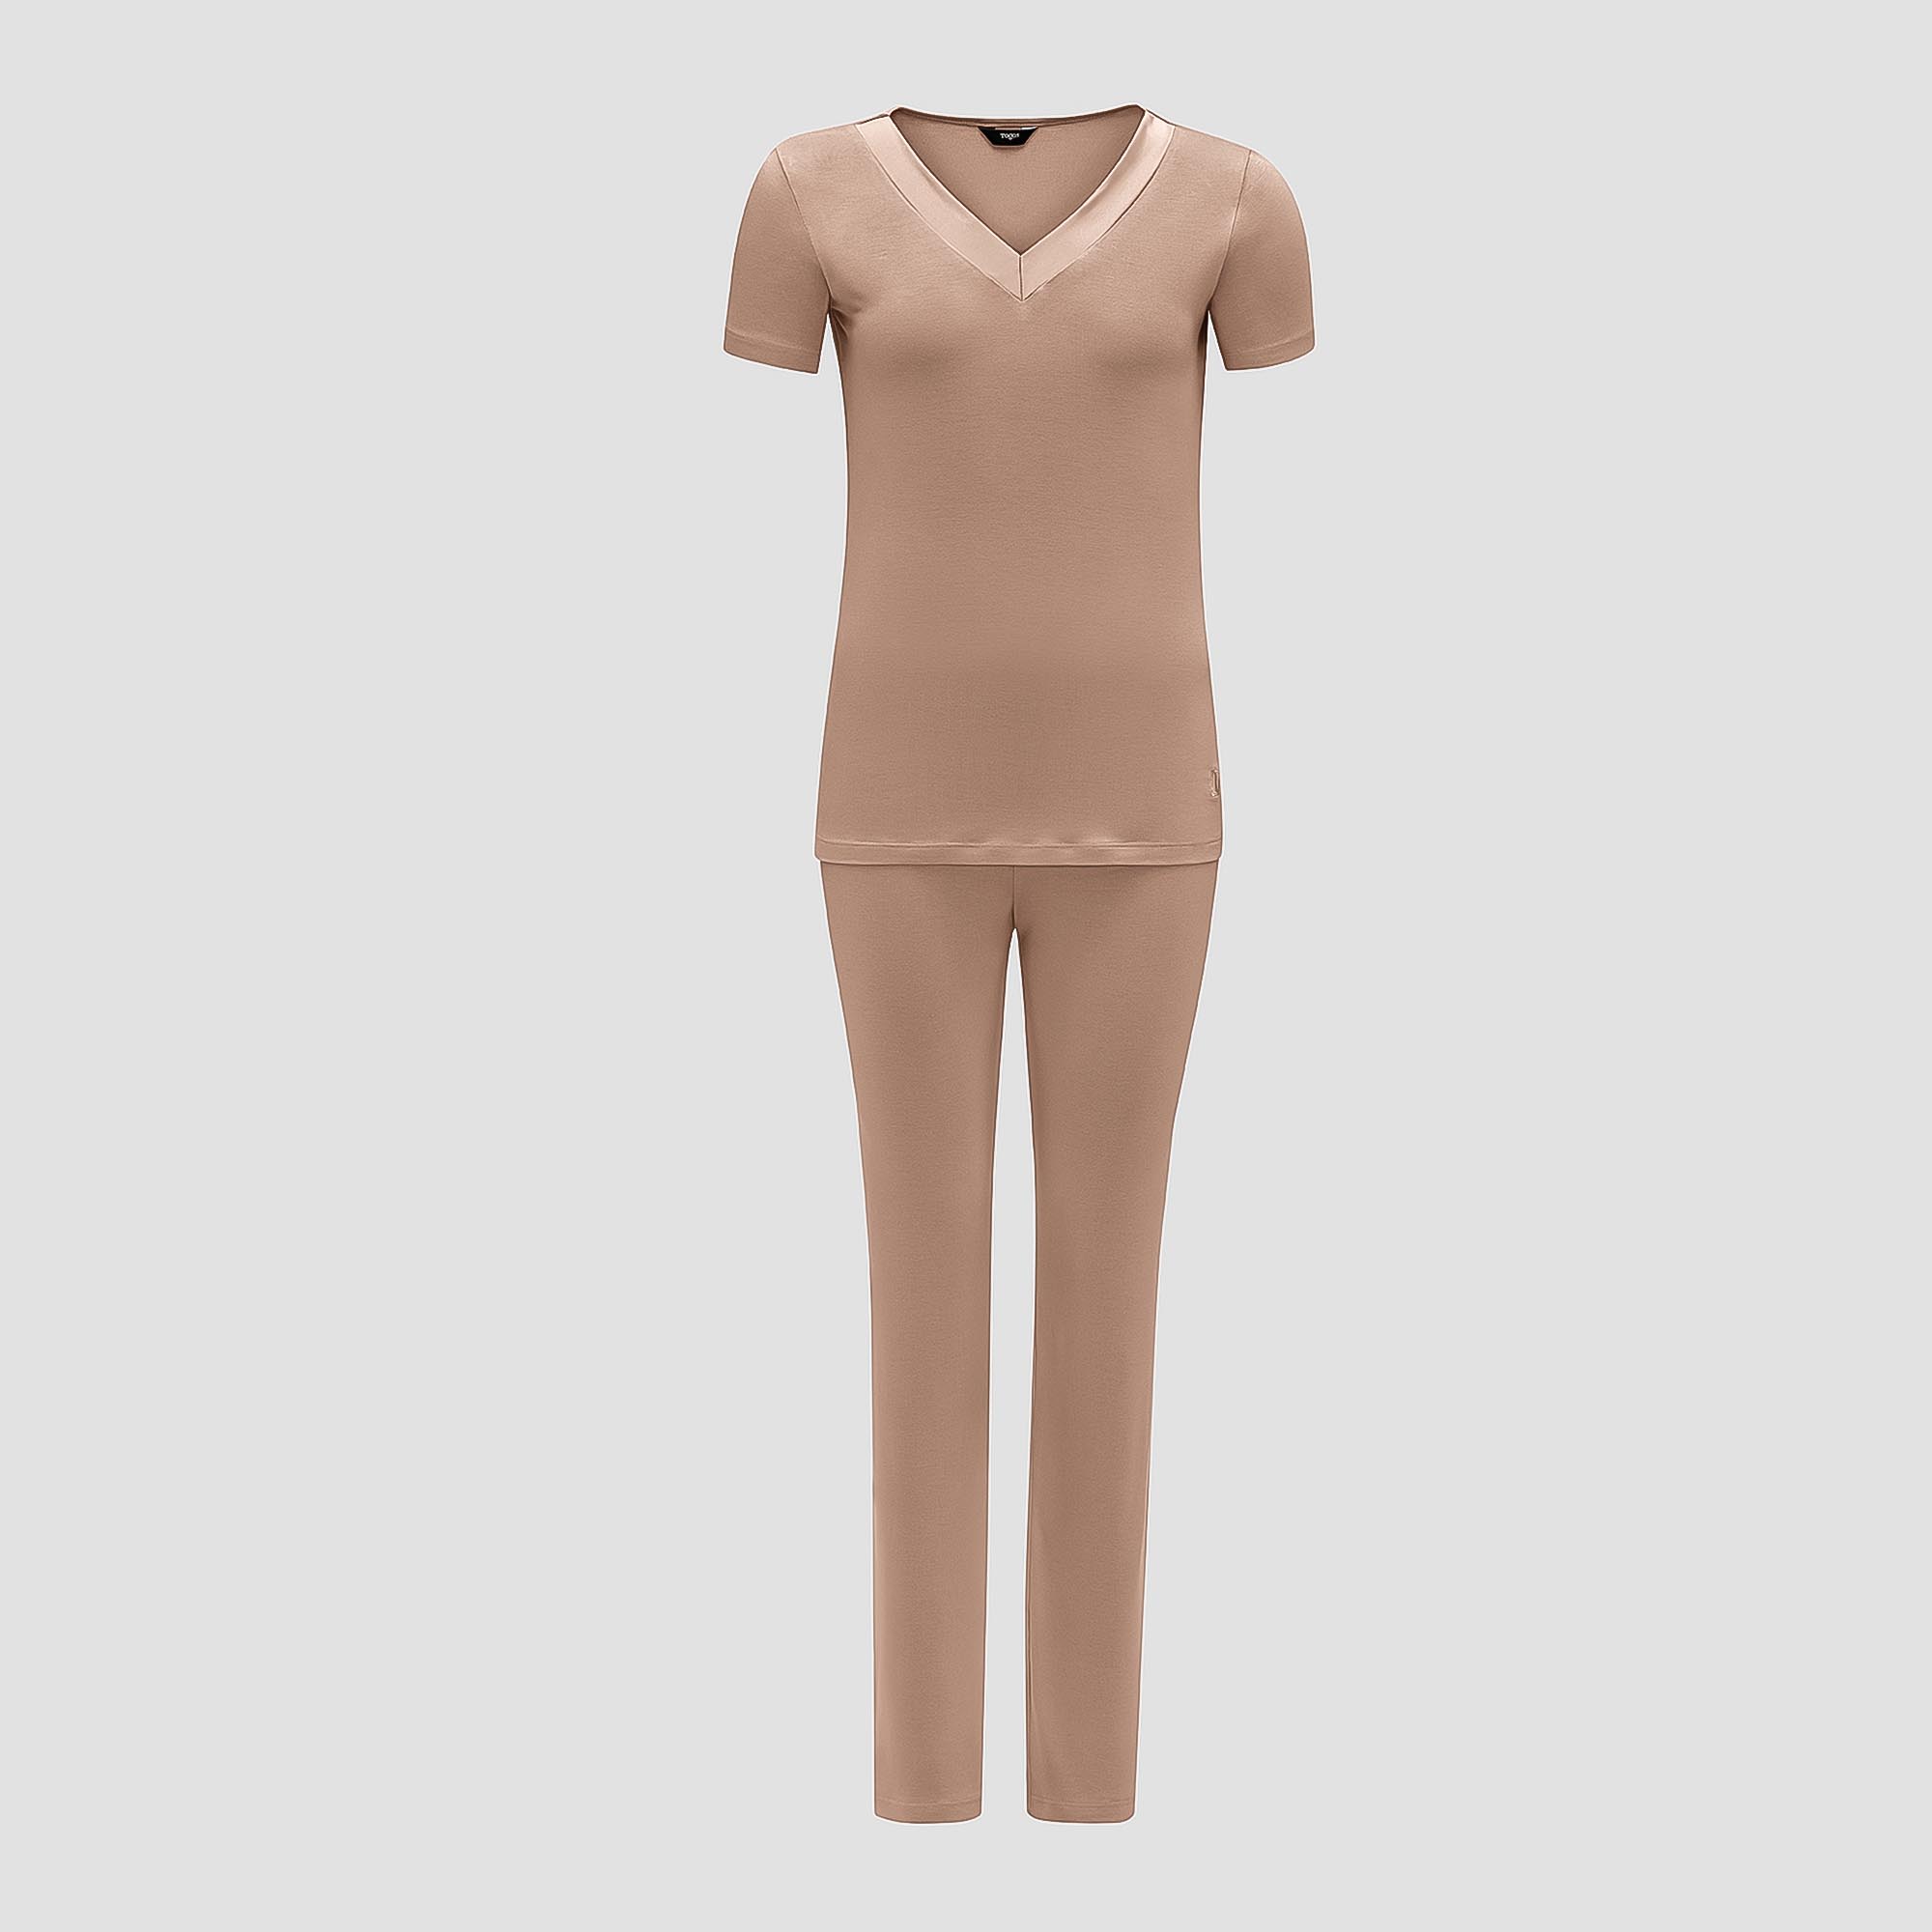 Пижама Togas Ингелла розово-бежевая женская S(44) 2 предмета пижама брюки